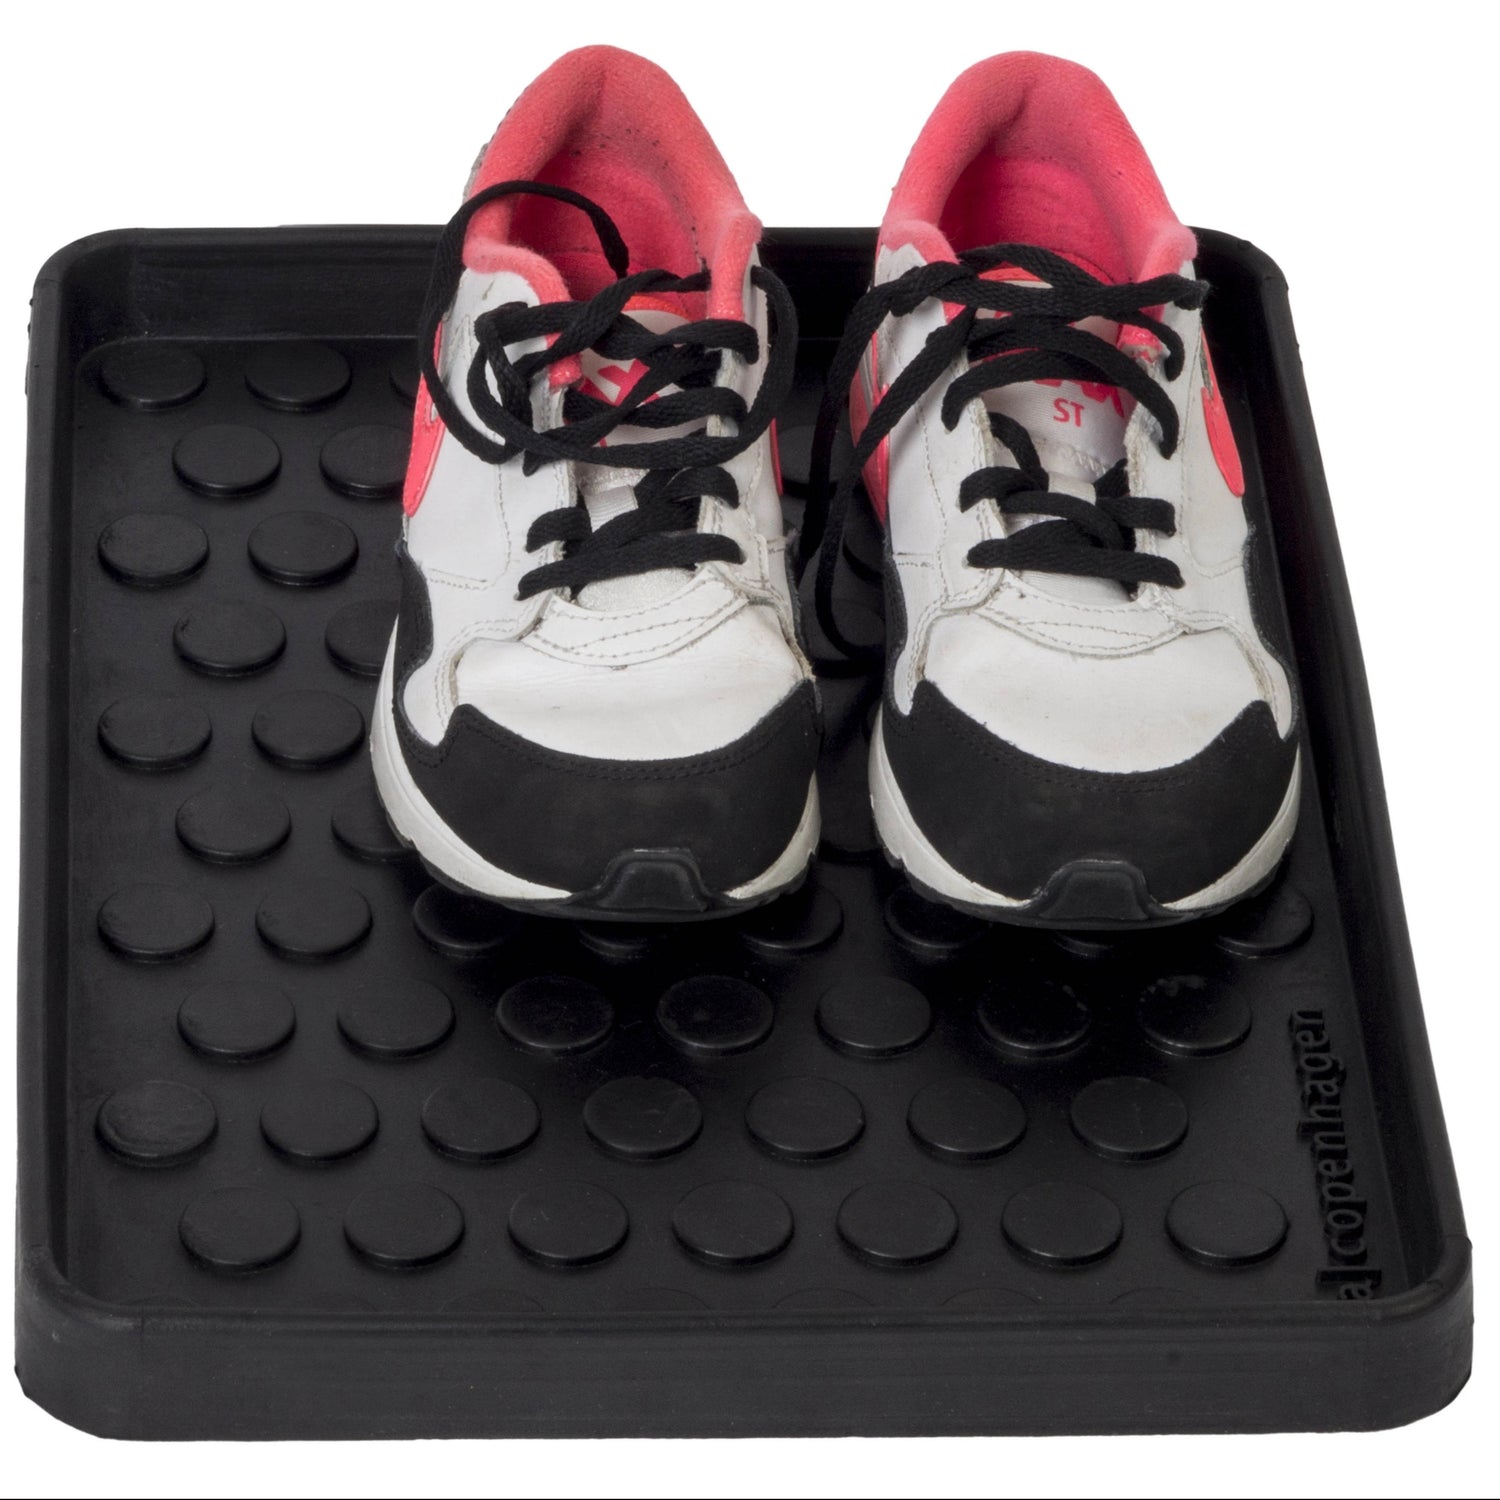 Shoe tray small - dot